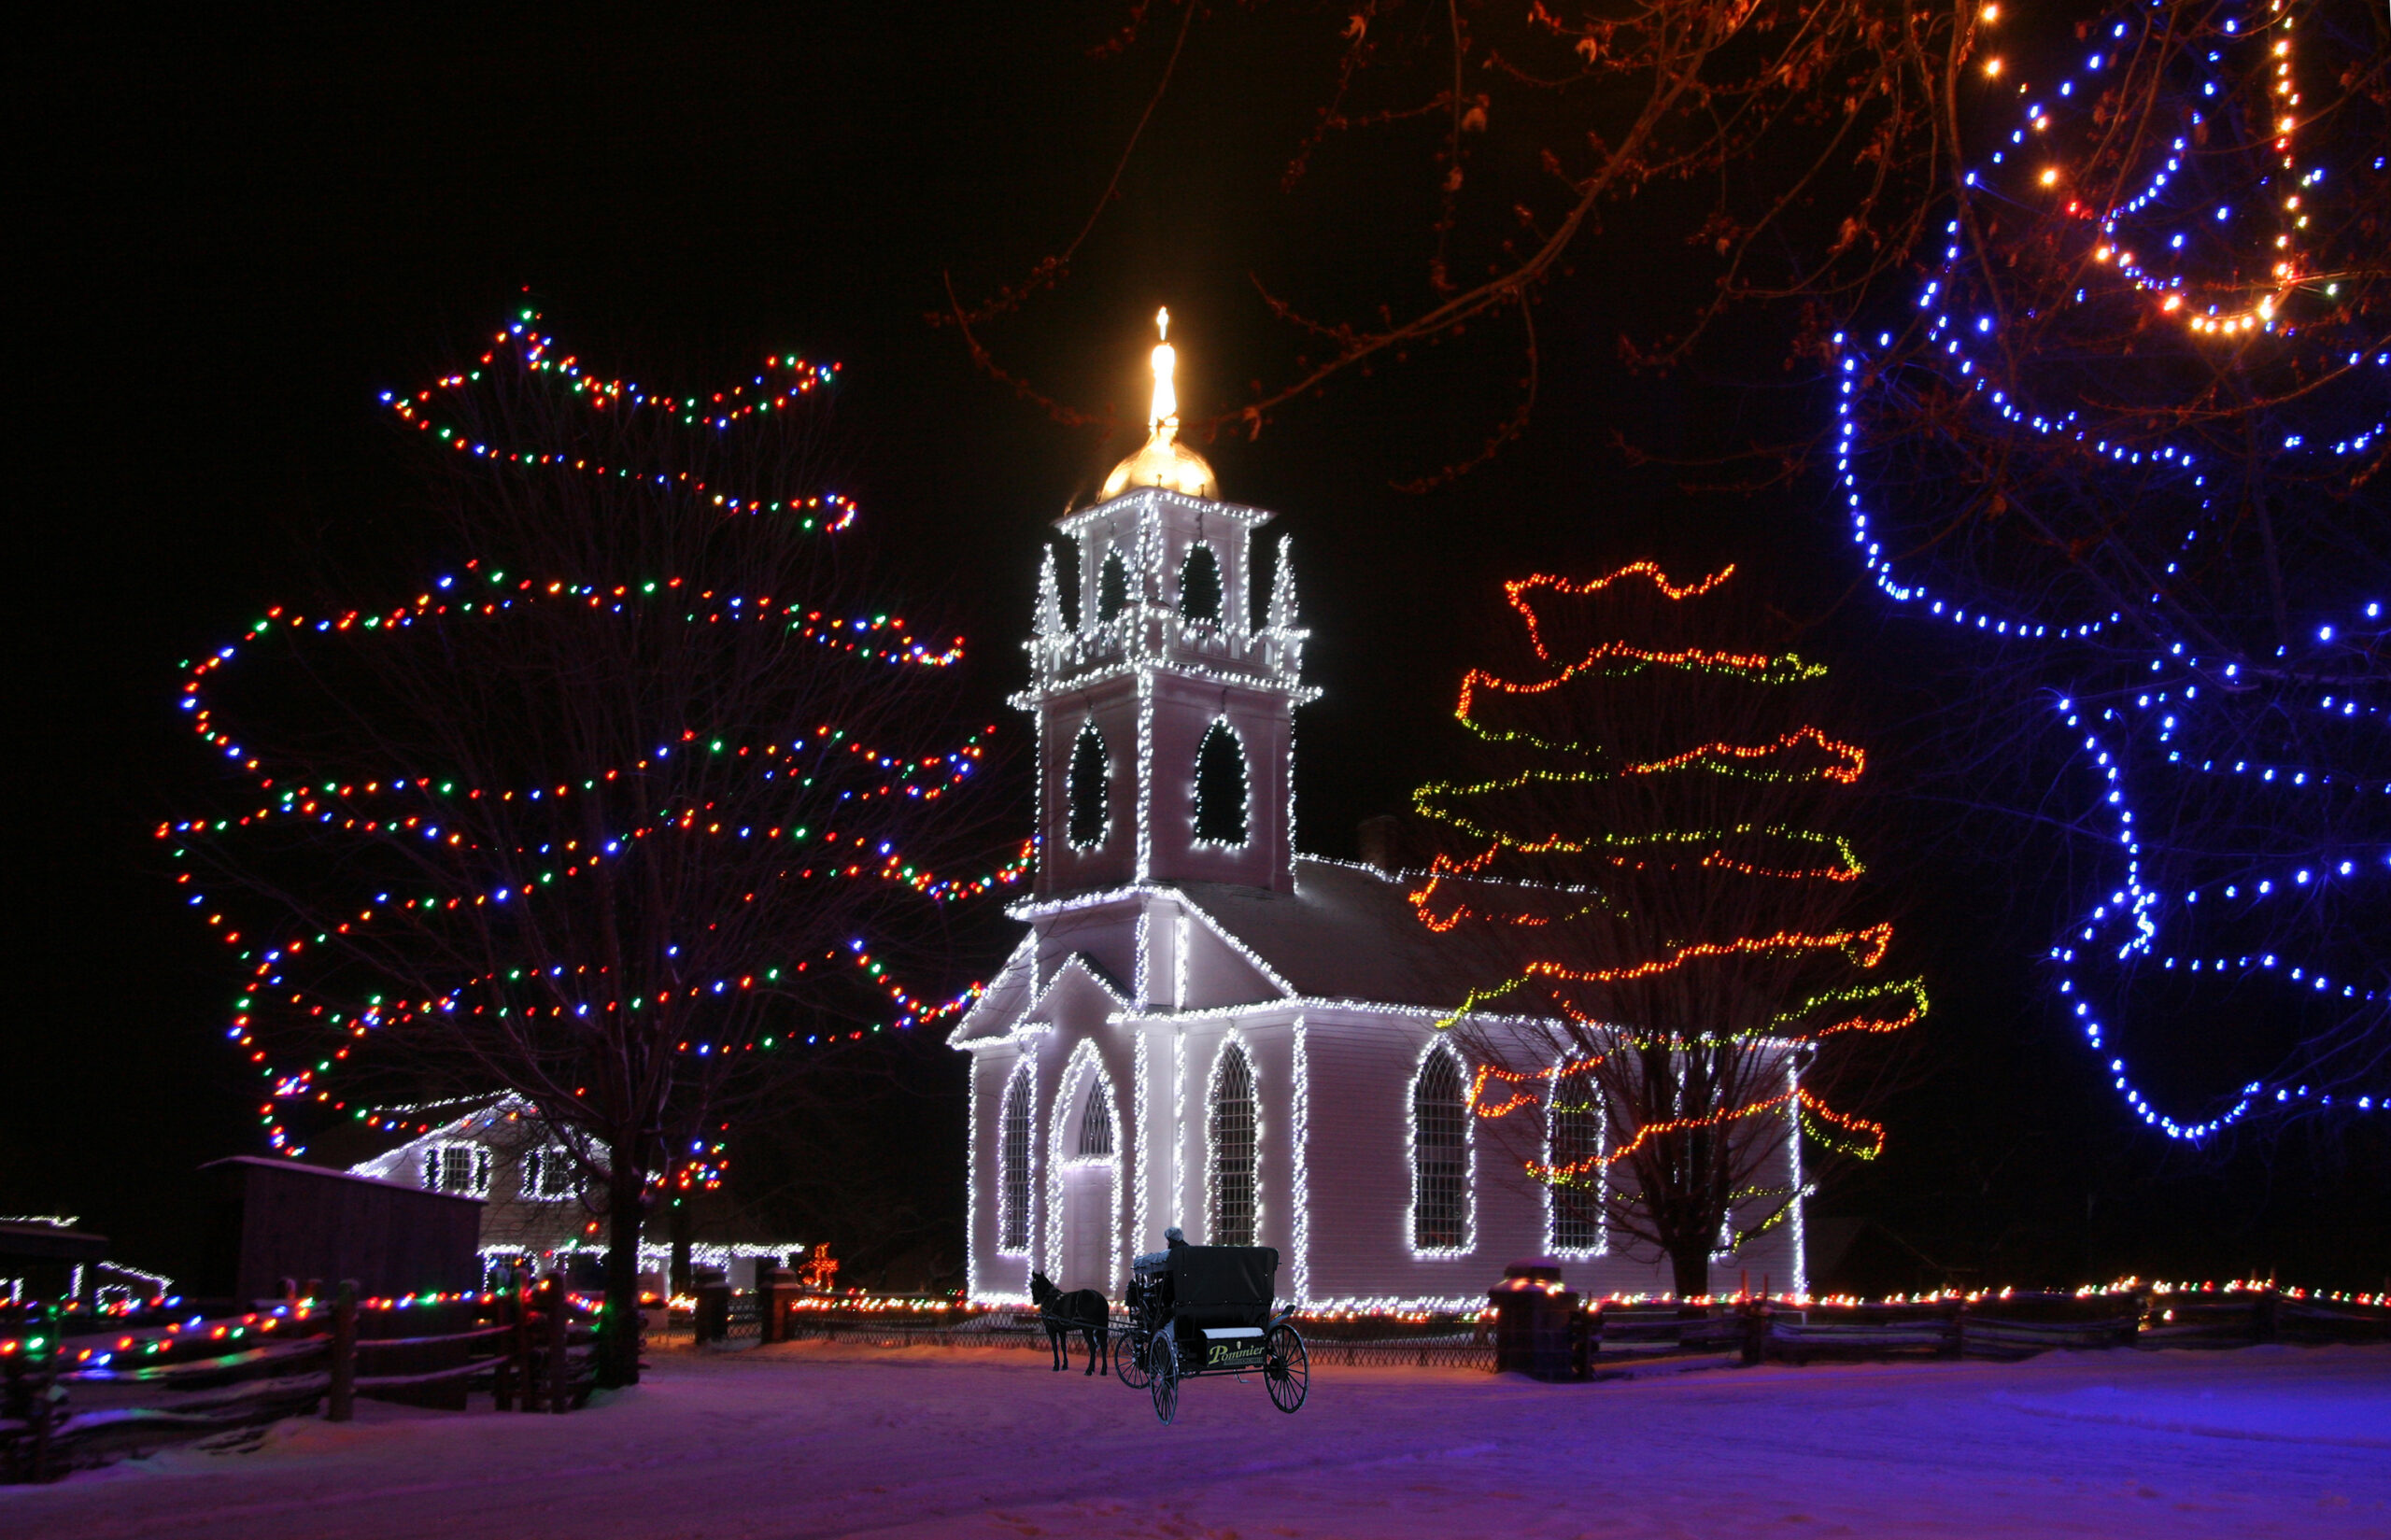 Christ Church at Upper Canada Village adorned in holiday lights during Alight at Night Festival.